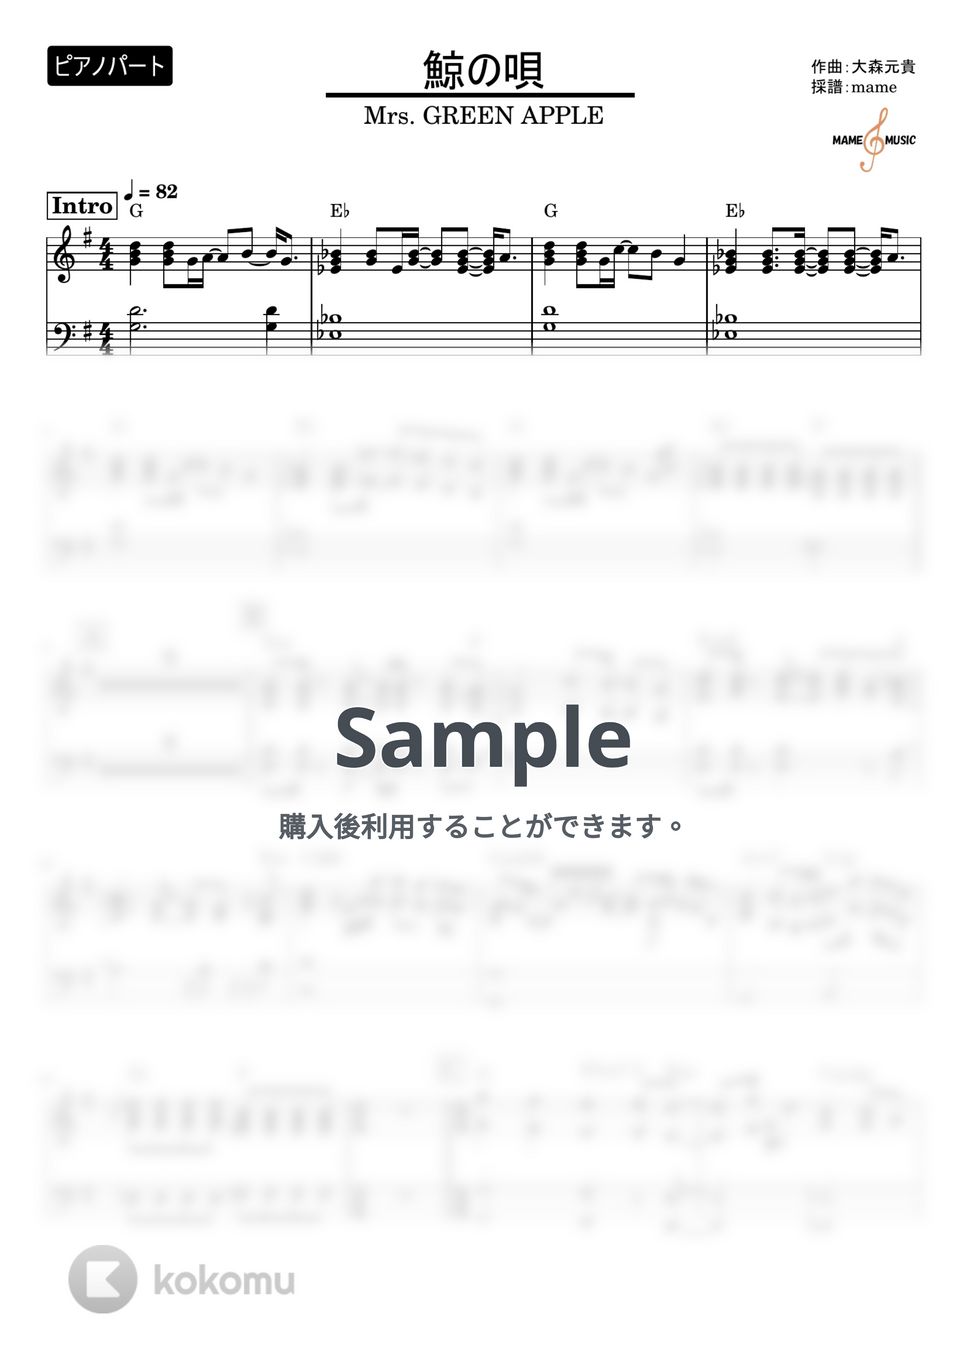 Mrs. GREEN APPLE - 鯨の唄 (ピアノパート) by mame